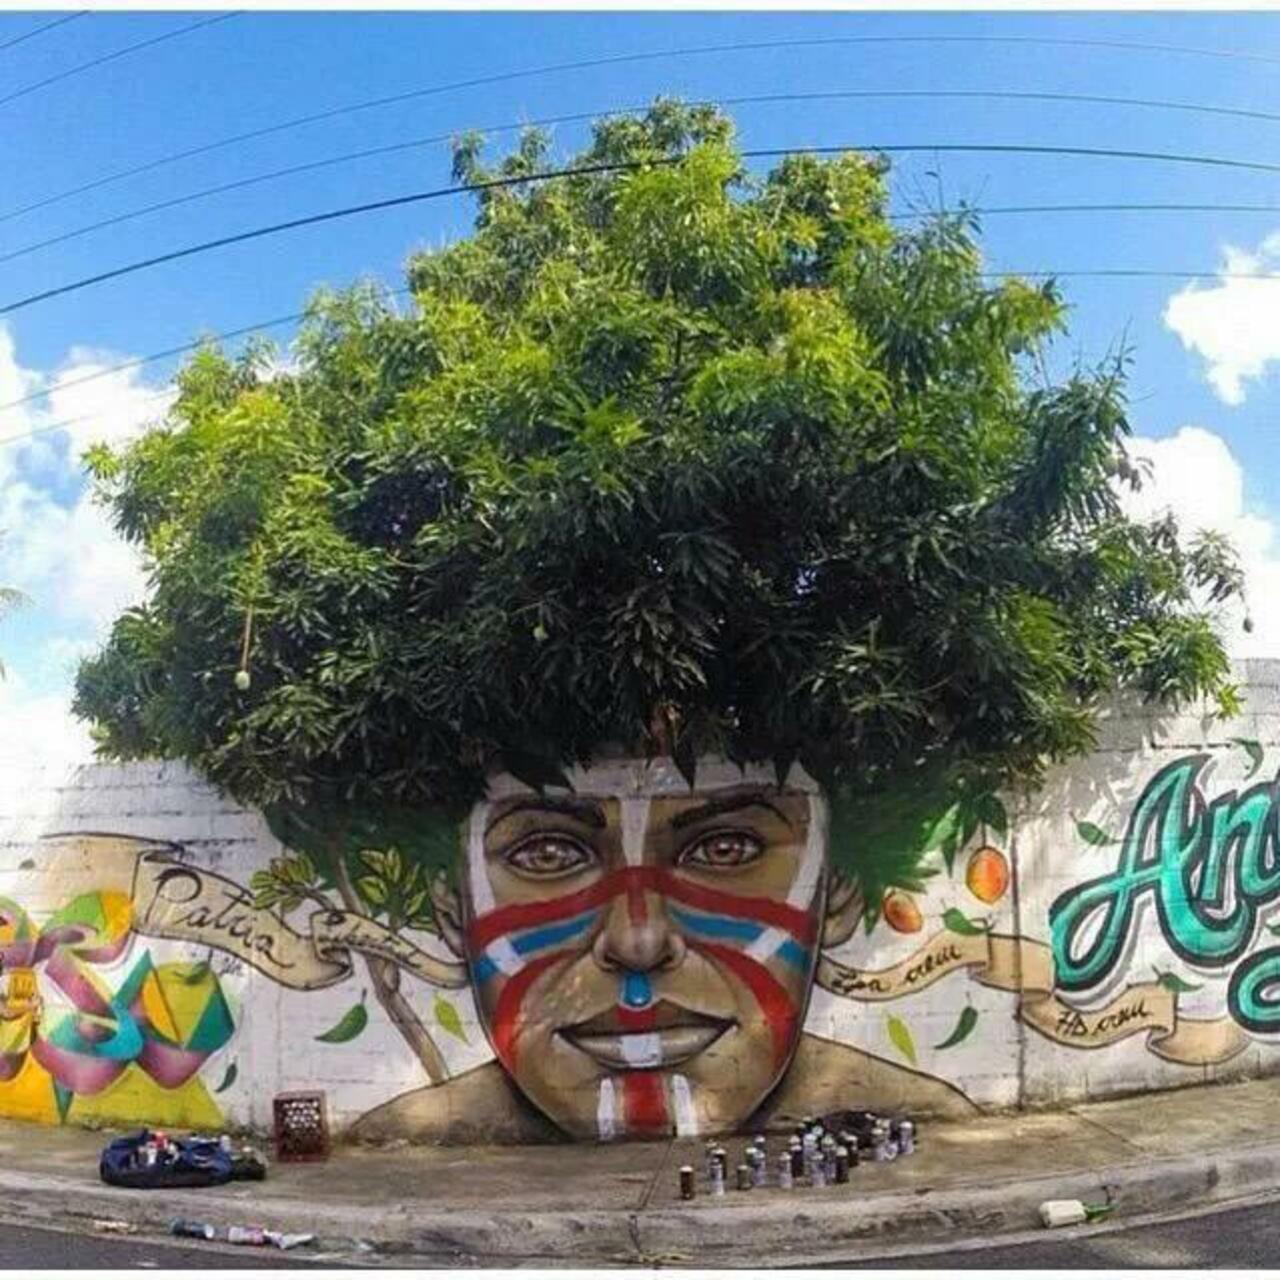 RT @richardbanfa: #switch #nature into #streetart #bedifferent #graffiti #arte #art http://t.co/TYy027wfbi